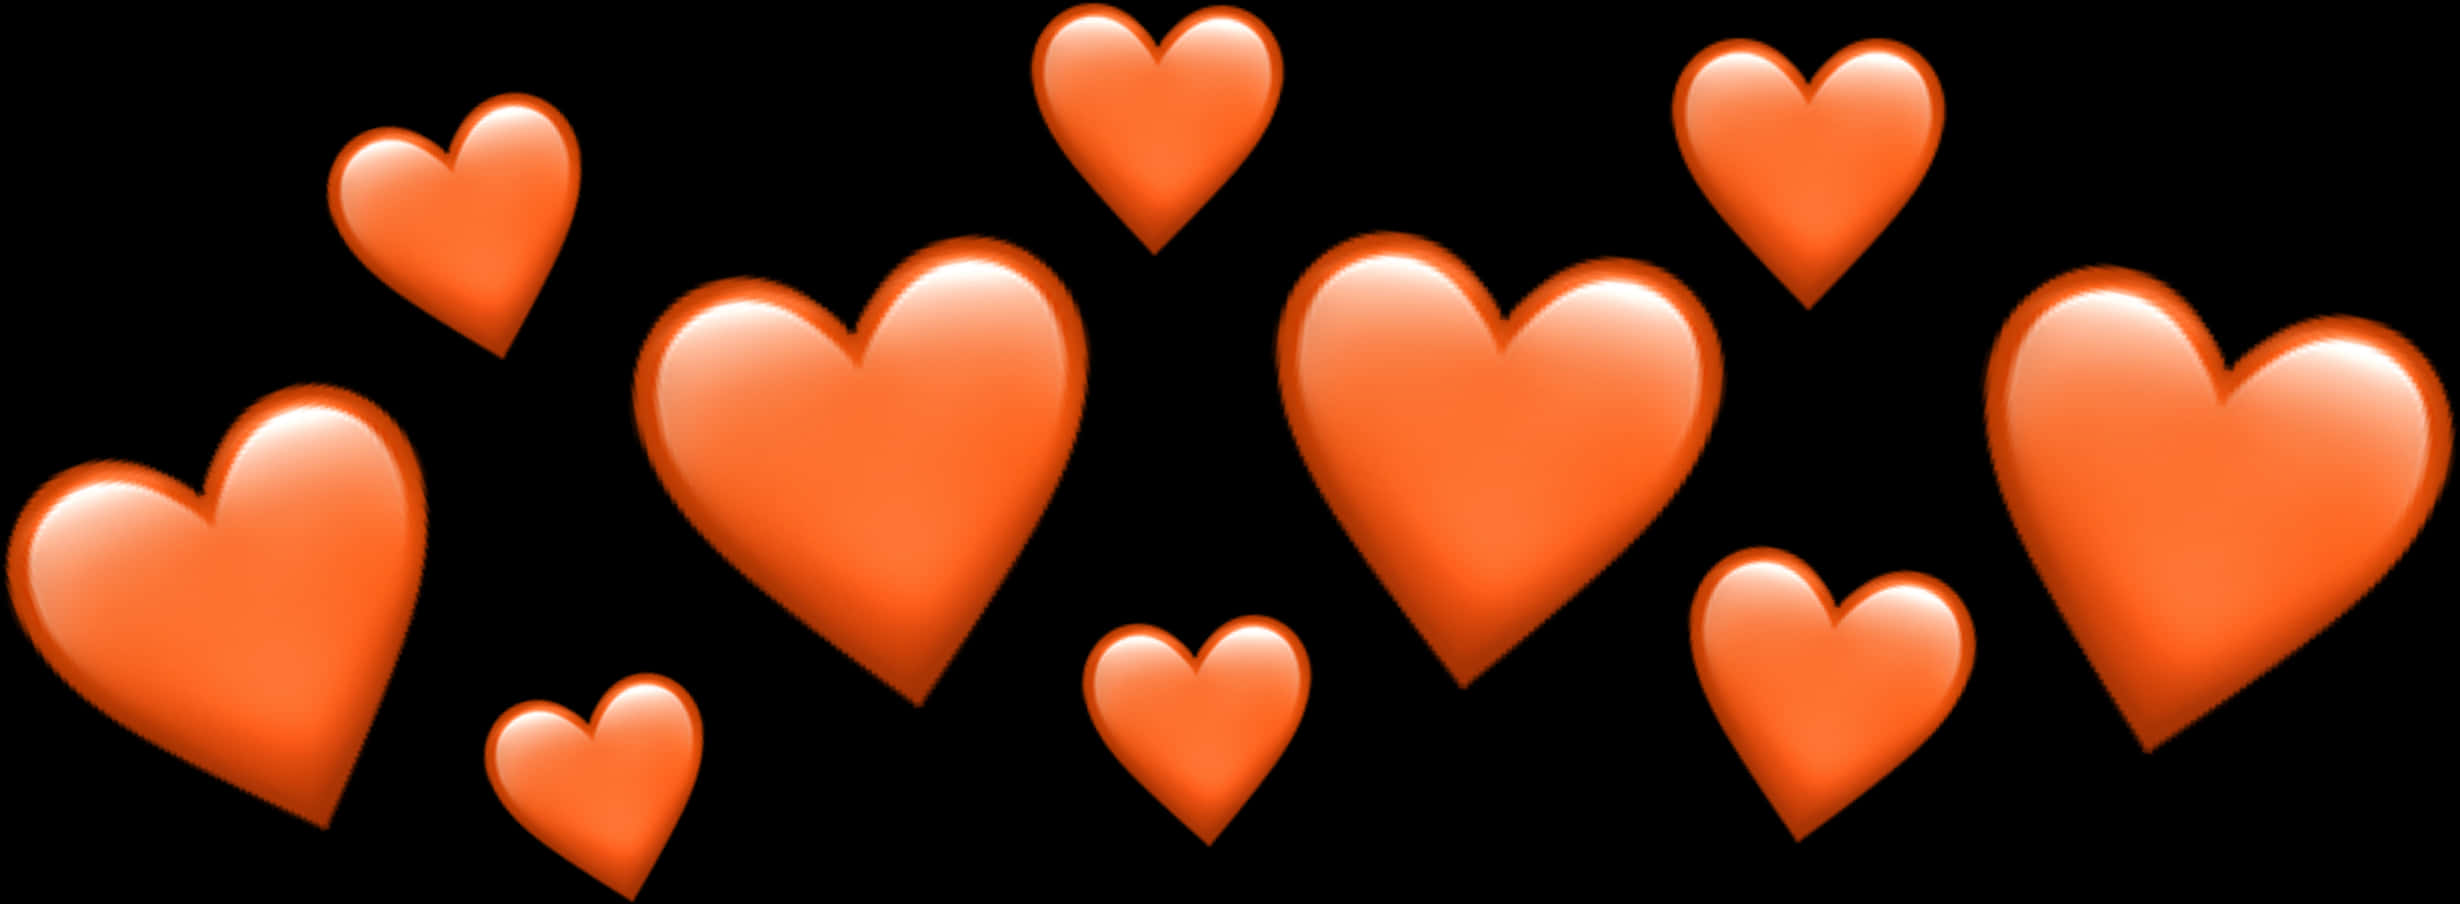 Orange Heart Emojis Black Background PNG image